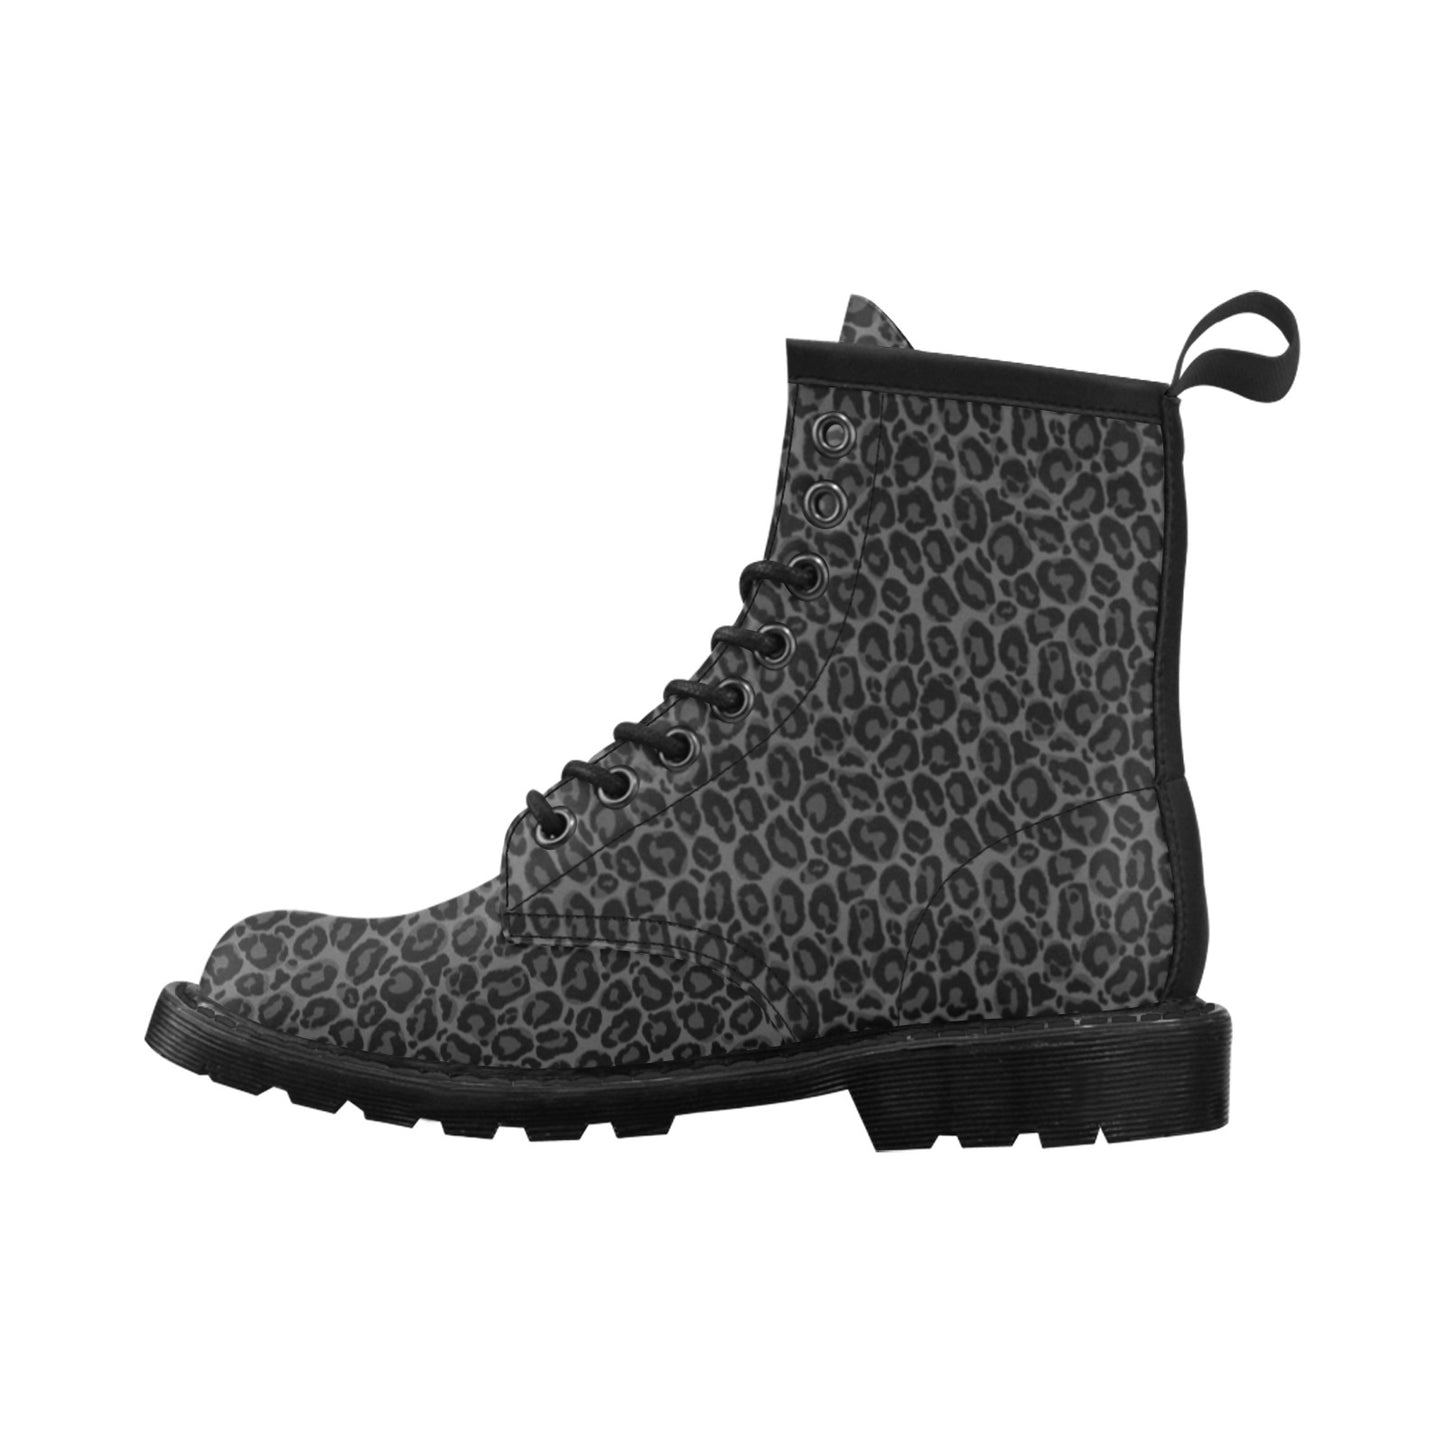 Black Leopard Men Leather Boots, Animal Print Lace Up Shoes Festival Black Ankle Combat Winter Custom Walking Hiking Pull On Designer